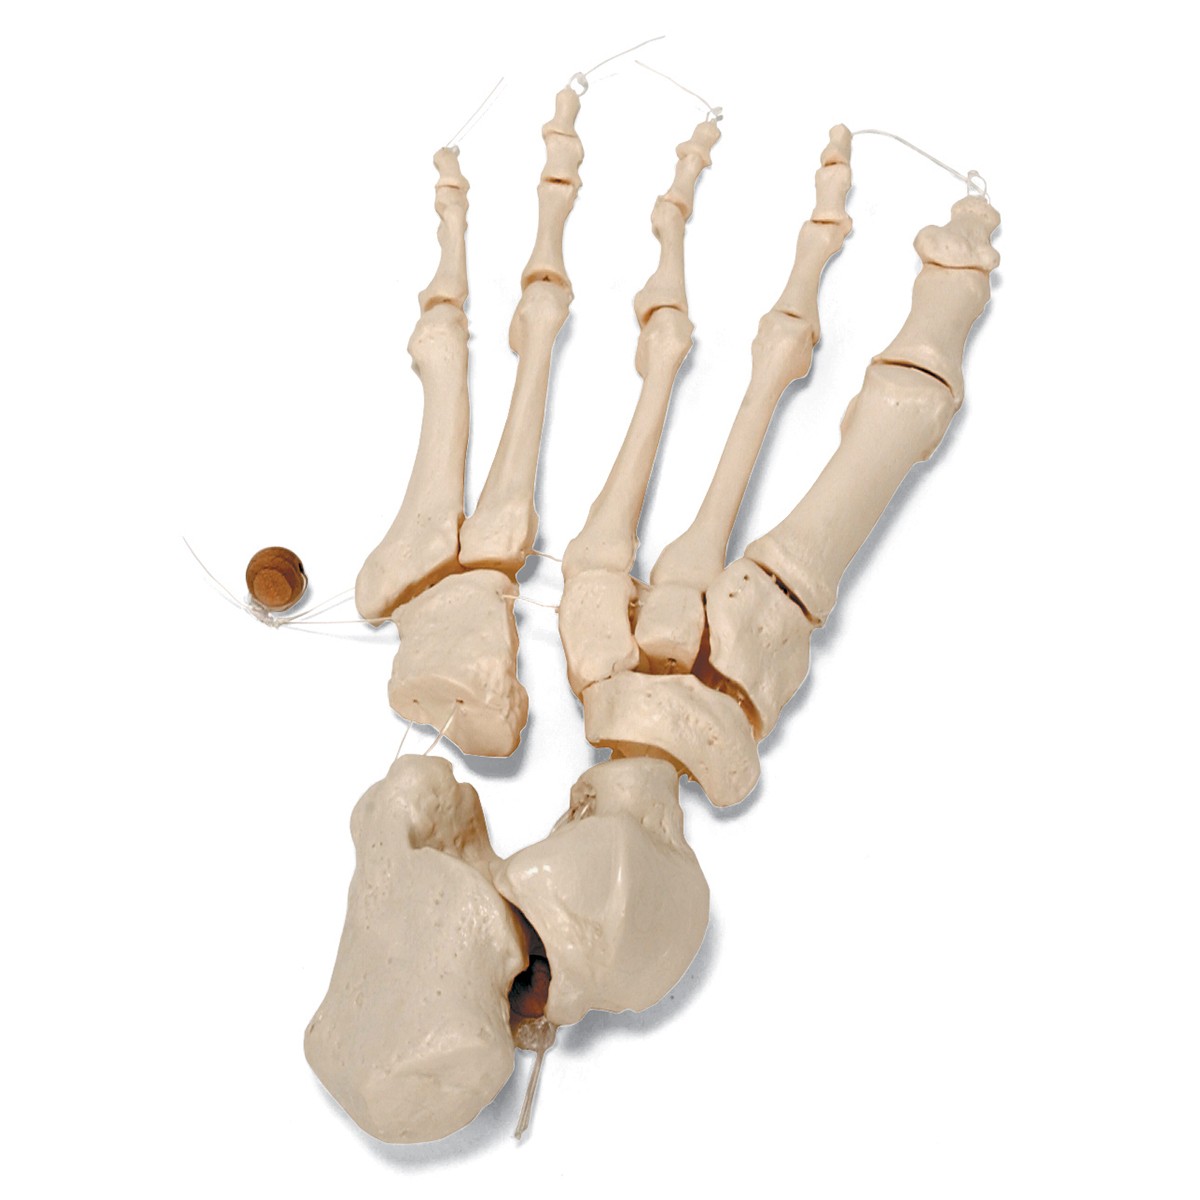 Loose bones. Суставы кистей и стоп анатомия. Рука кость с конфетами. Игрушка половина скелет. Articulated hand 3d model.